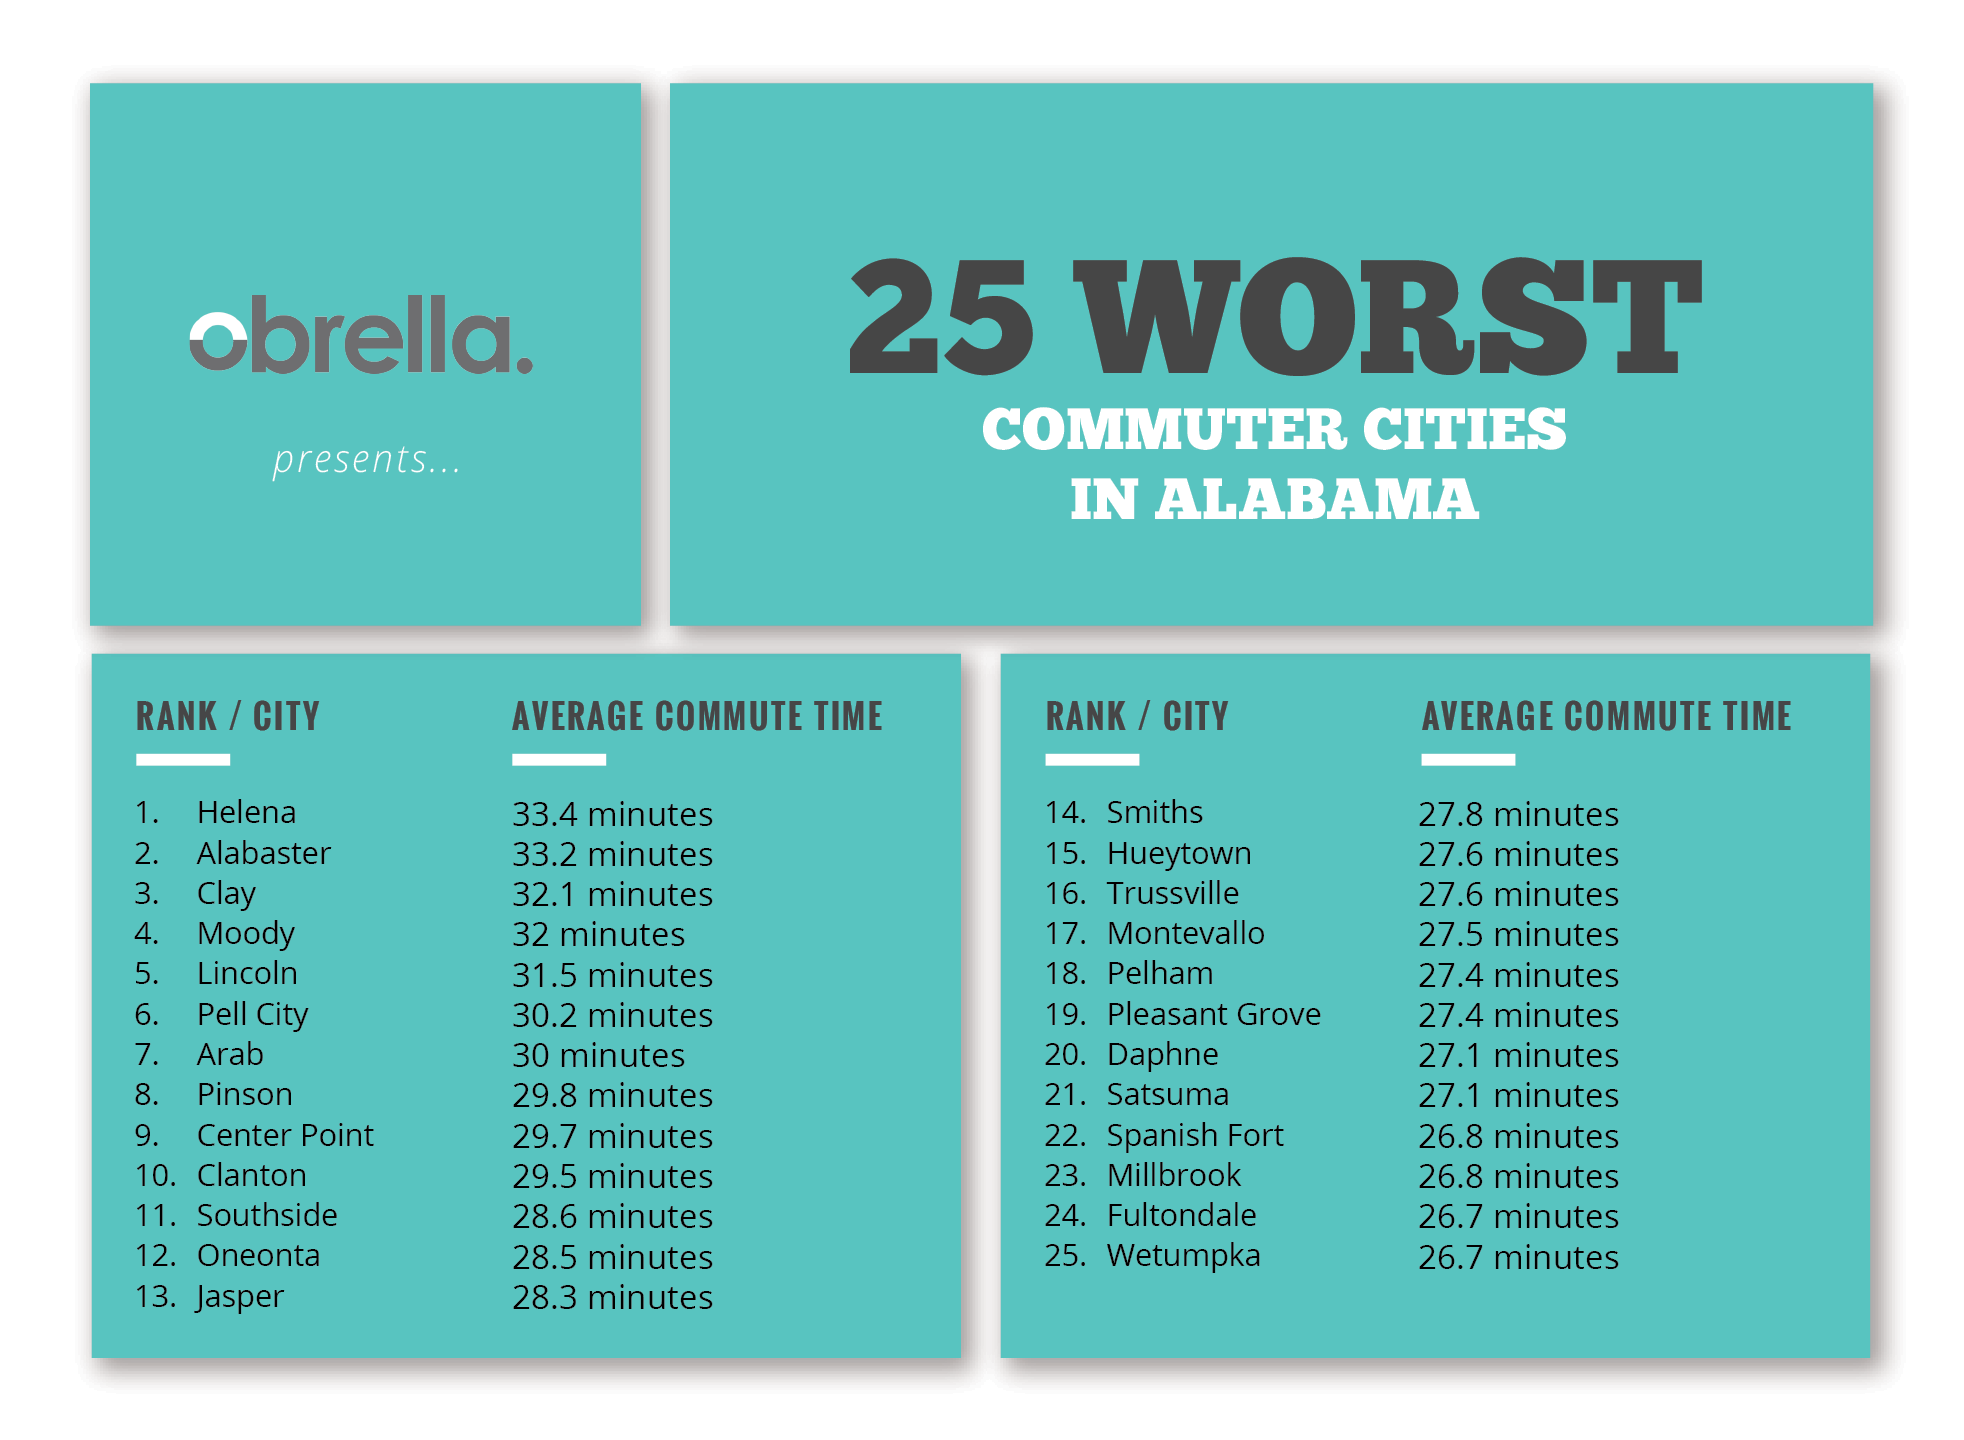 Worst Commuter Cities in Alabama